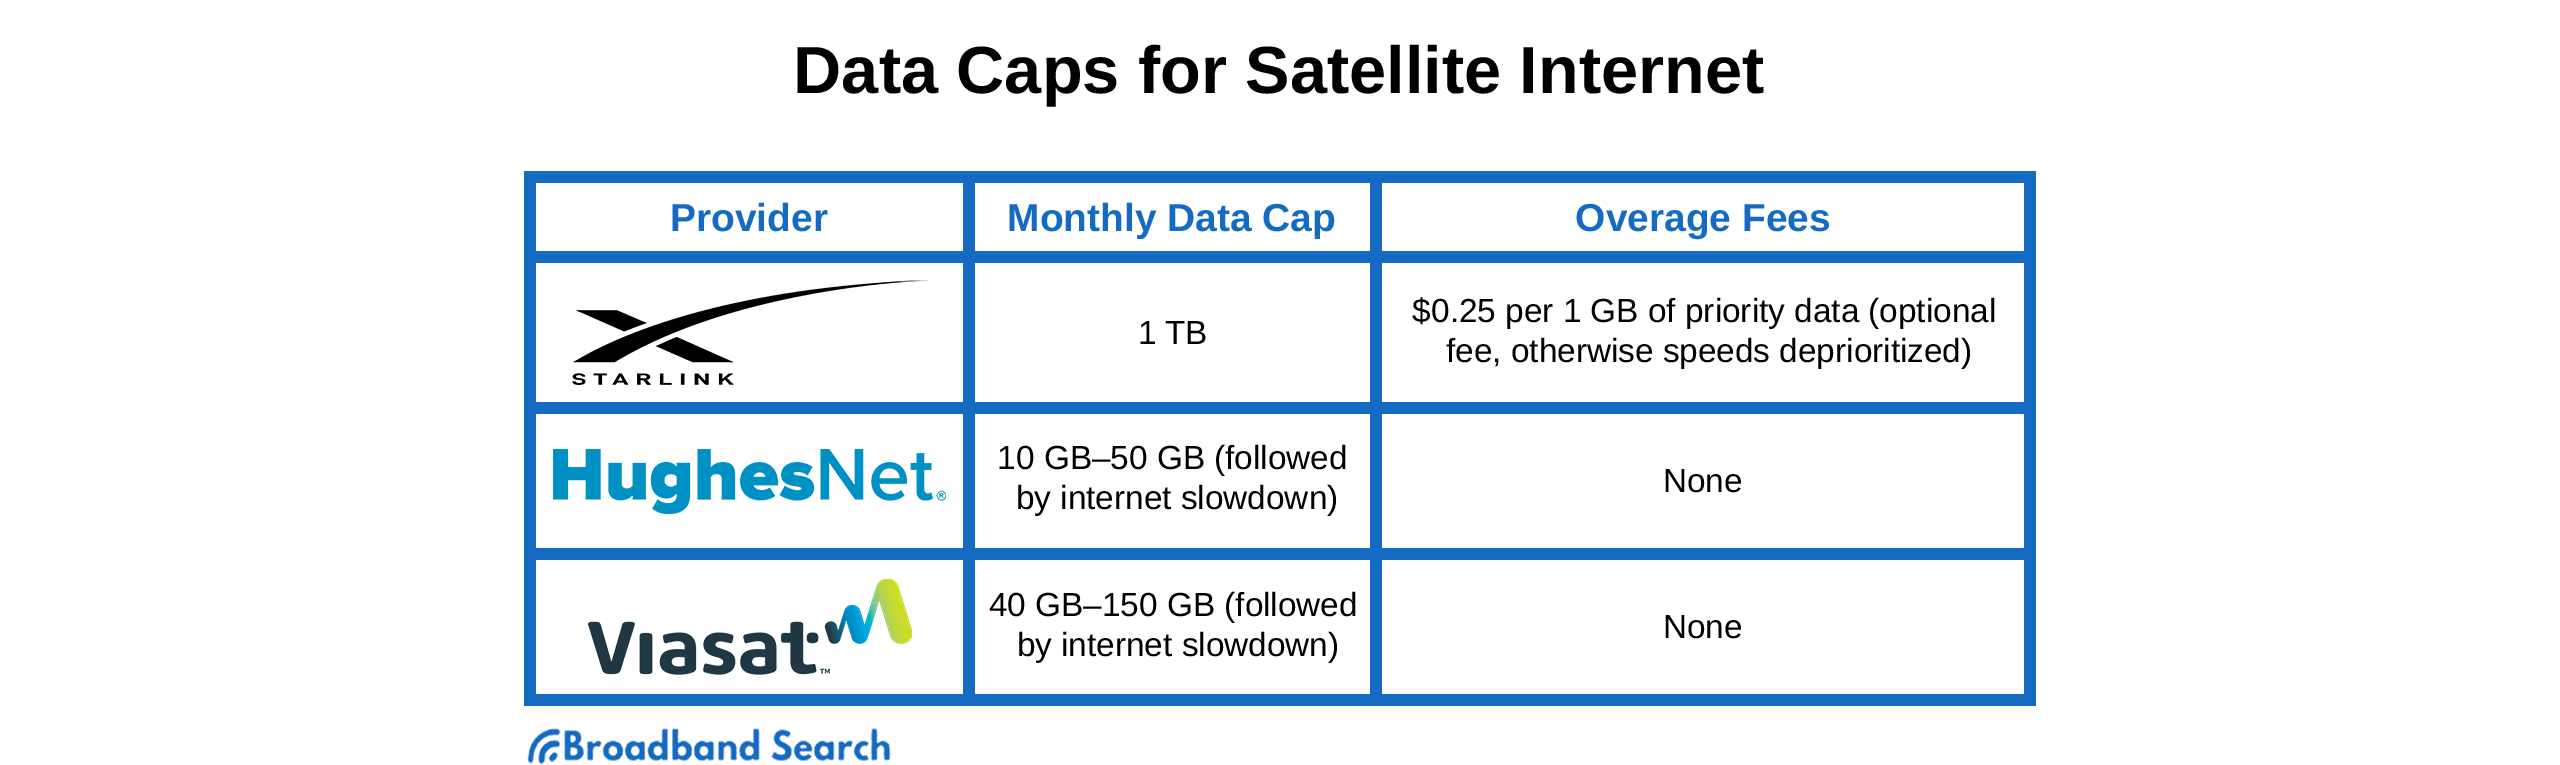 Data caps for satellite internet